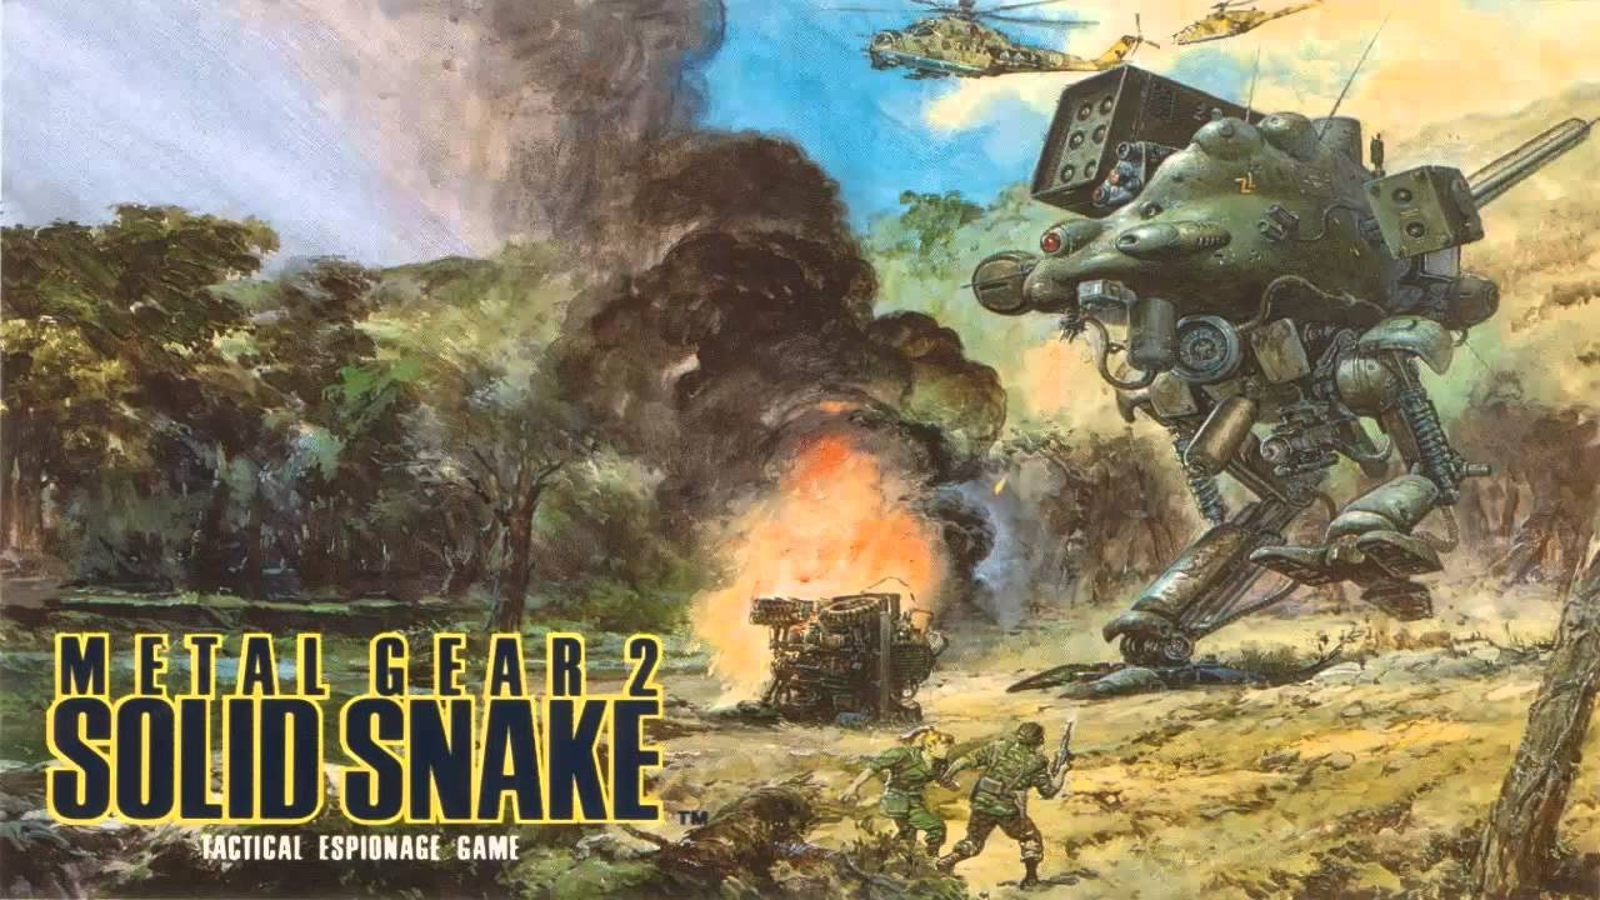 Metal Gear 2 Solid Snake - Part 2 